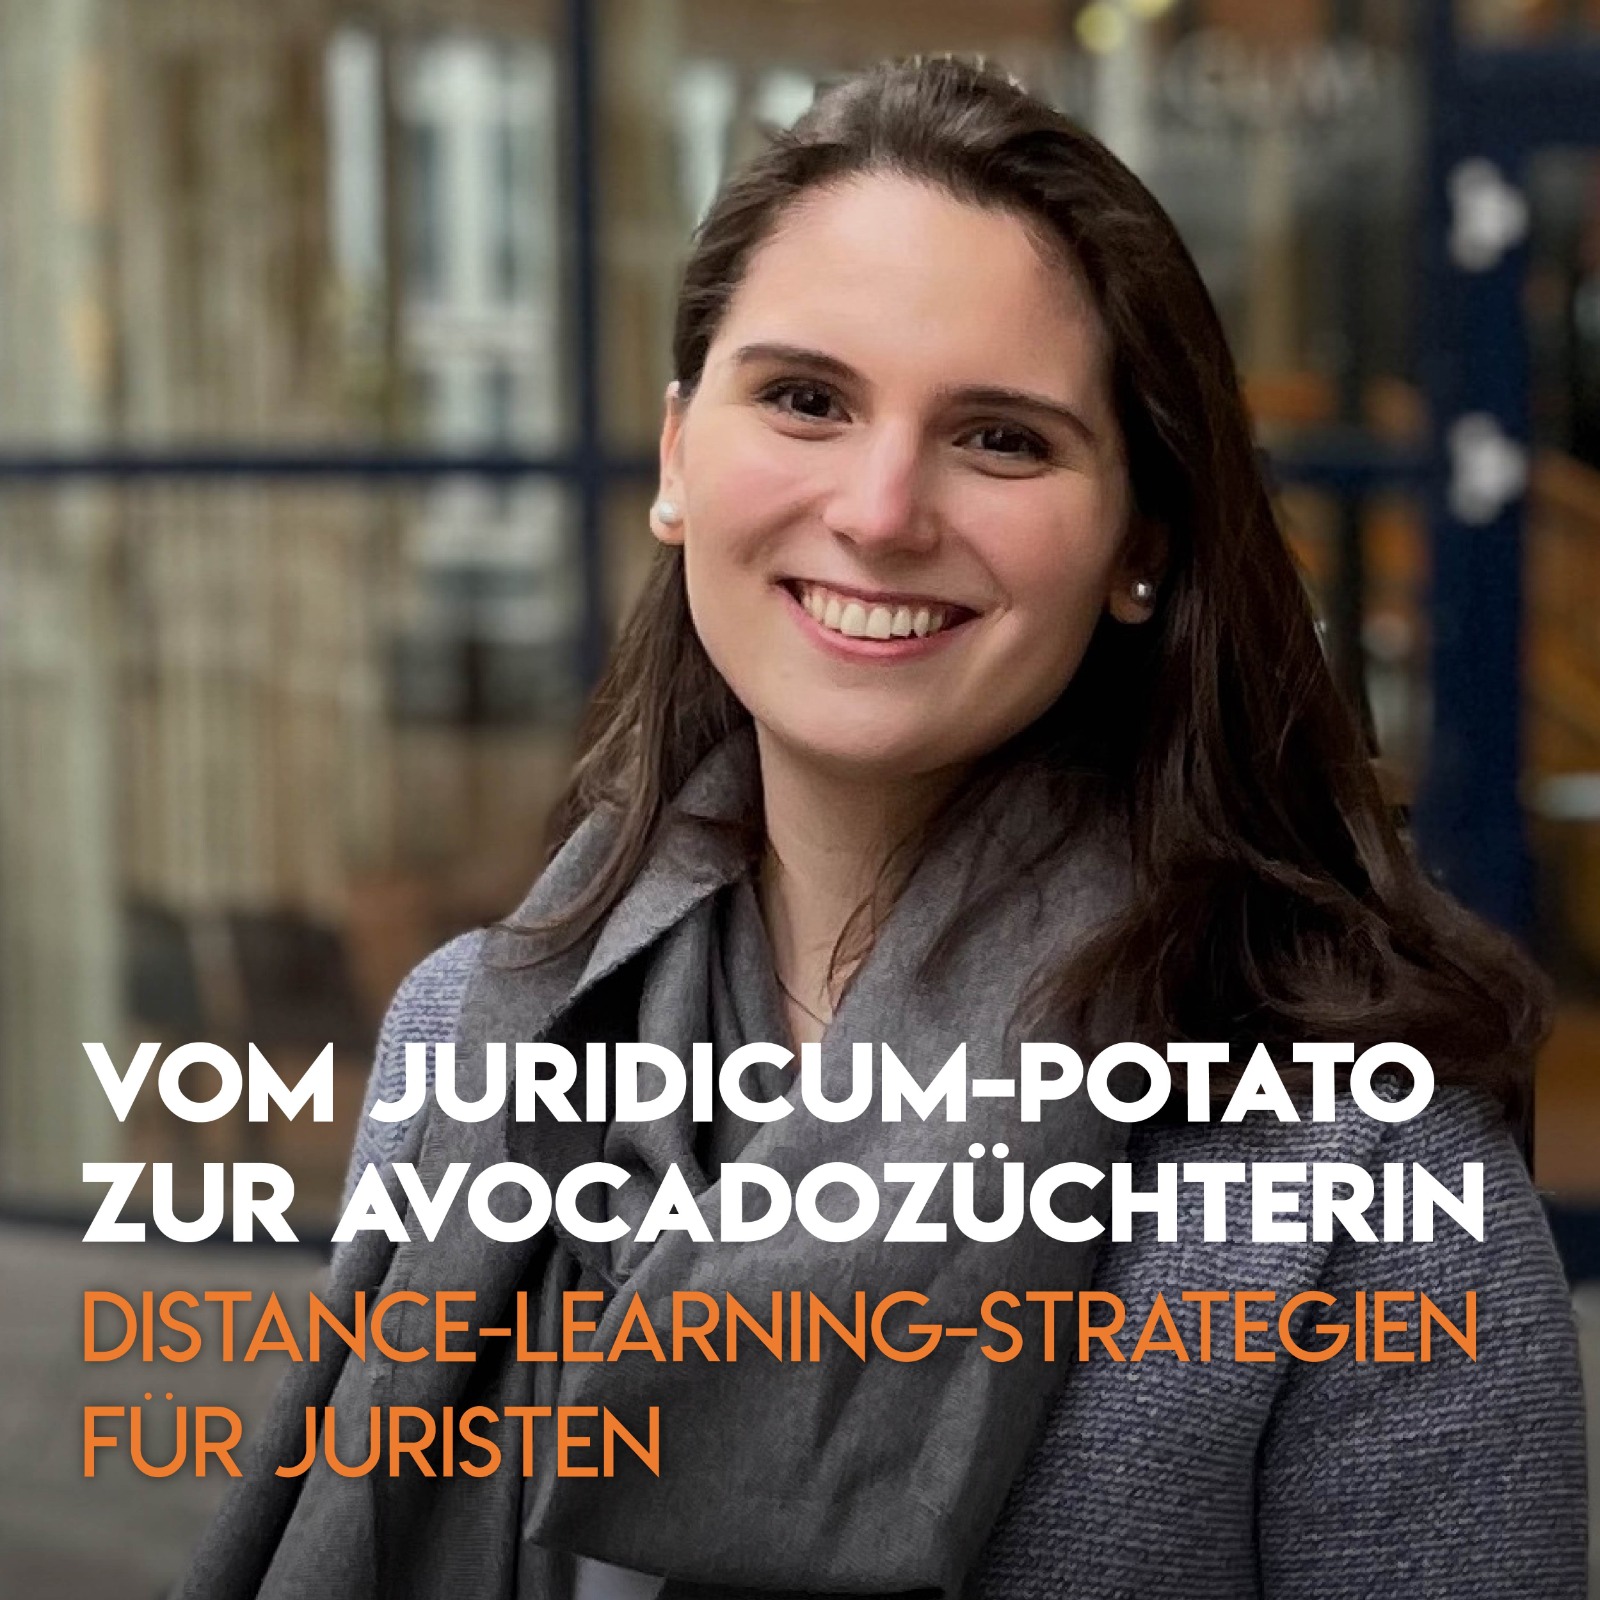 Vom Juridicumpotatoe zur Avocadozüchterin: Distance-Learning Strategien